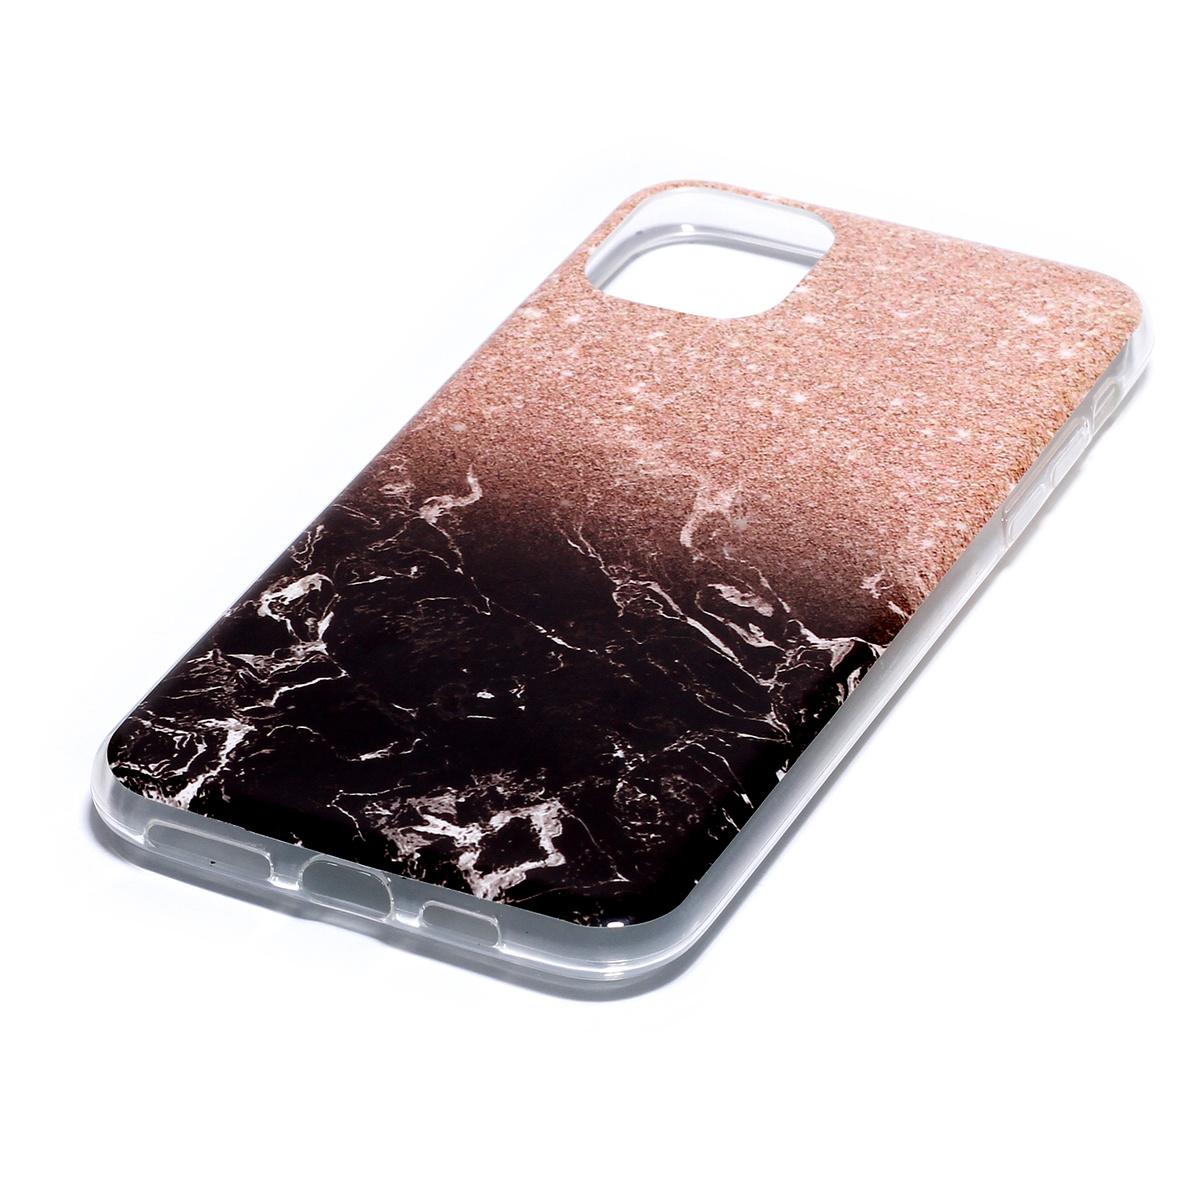 Trendigt marmorskal med mönster, iPhone 11 Pro Max, brun/svart